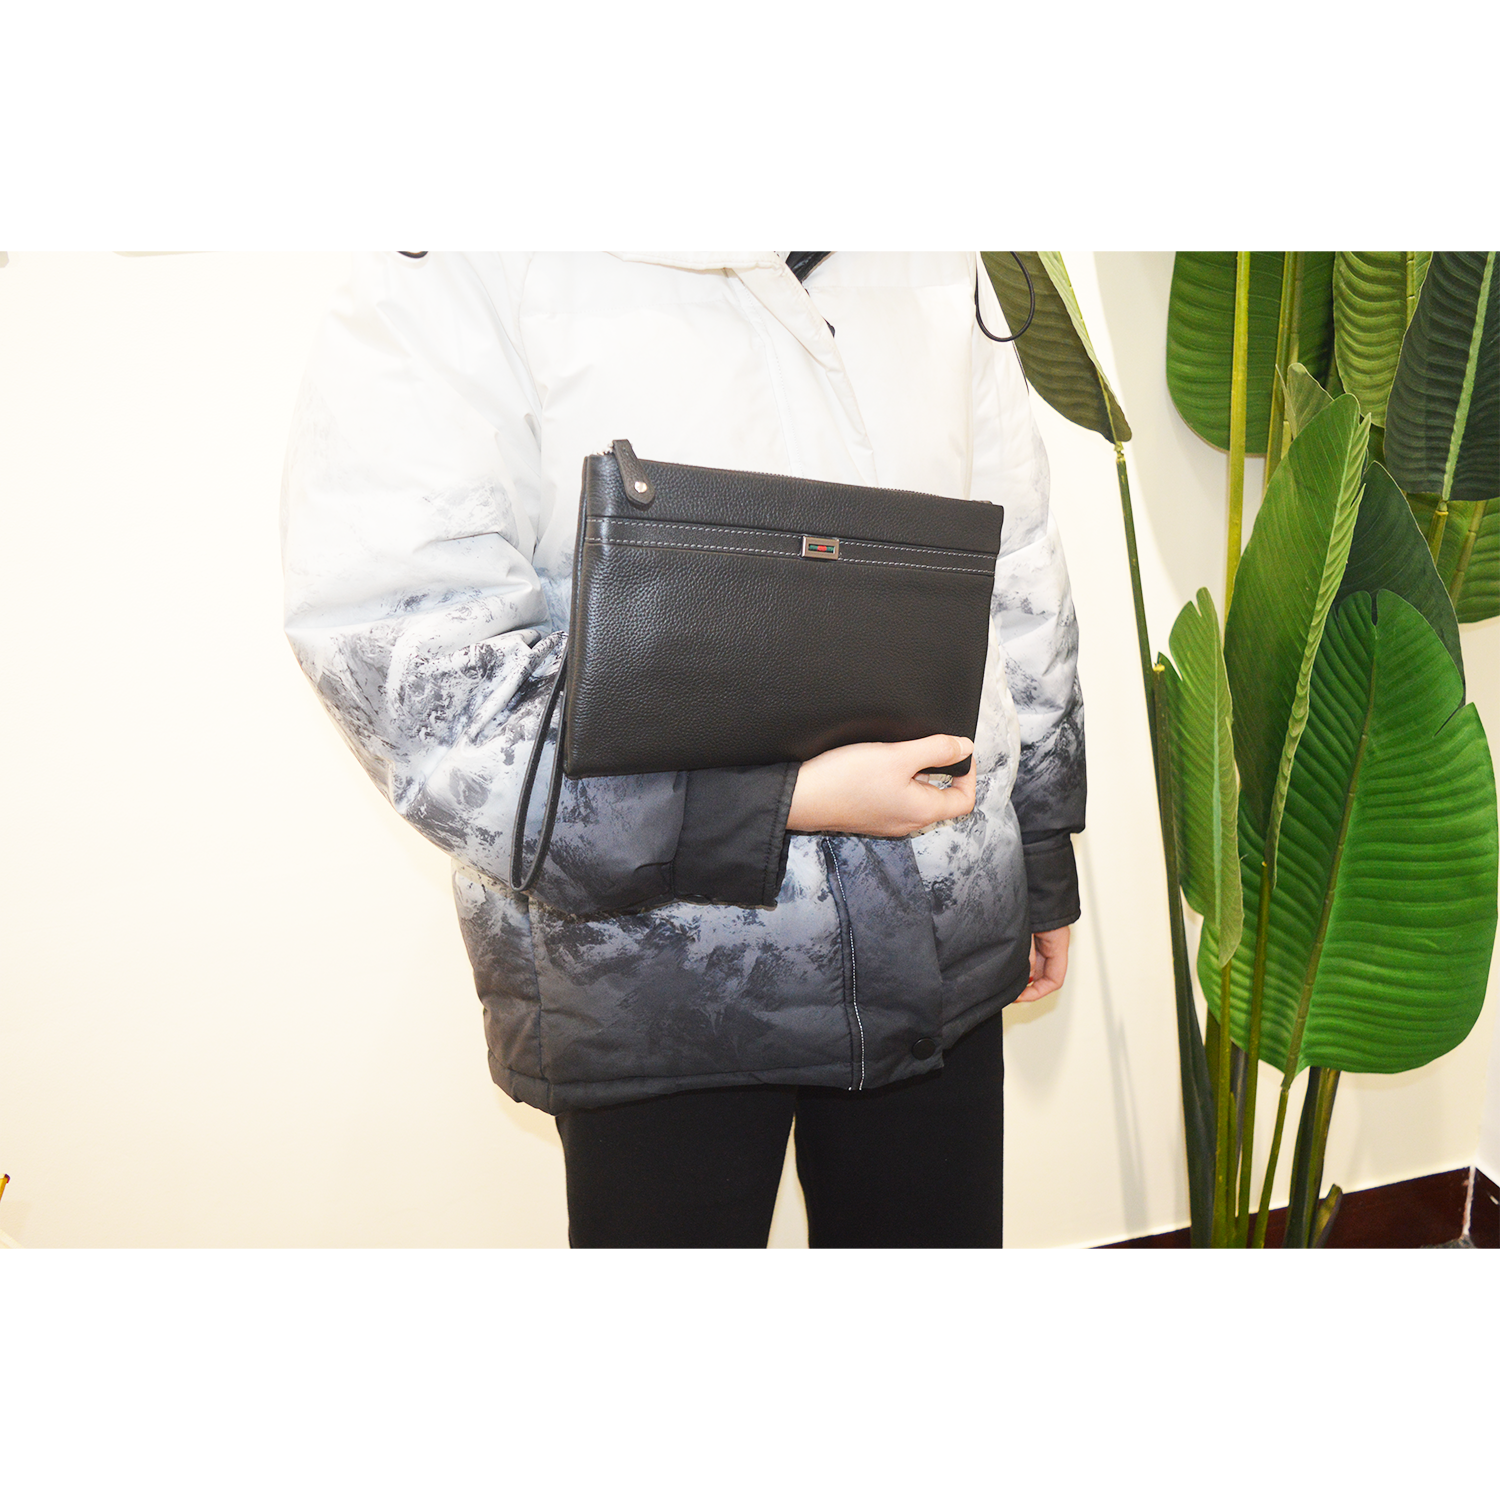 Luxury Durable Men's Genuine Leather Clutch Bag Business Wrist Wallet Zipper Purse Clutch Bag